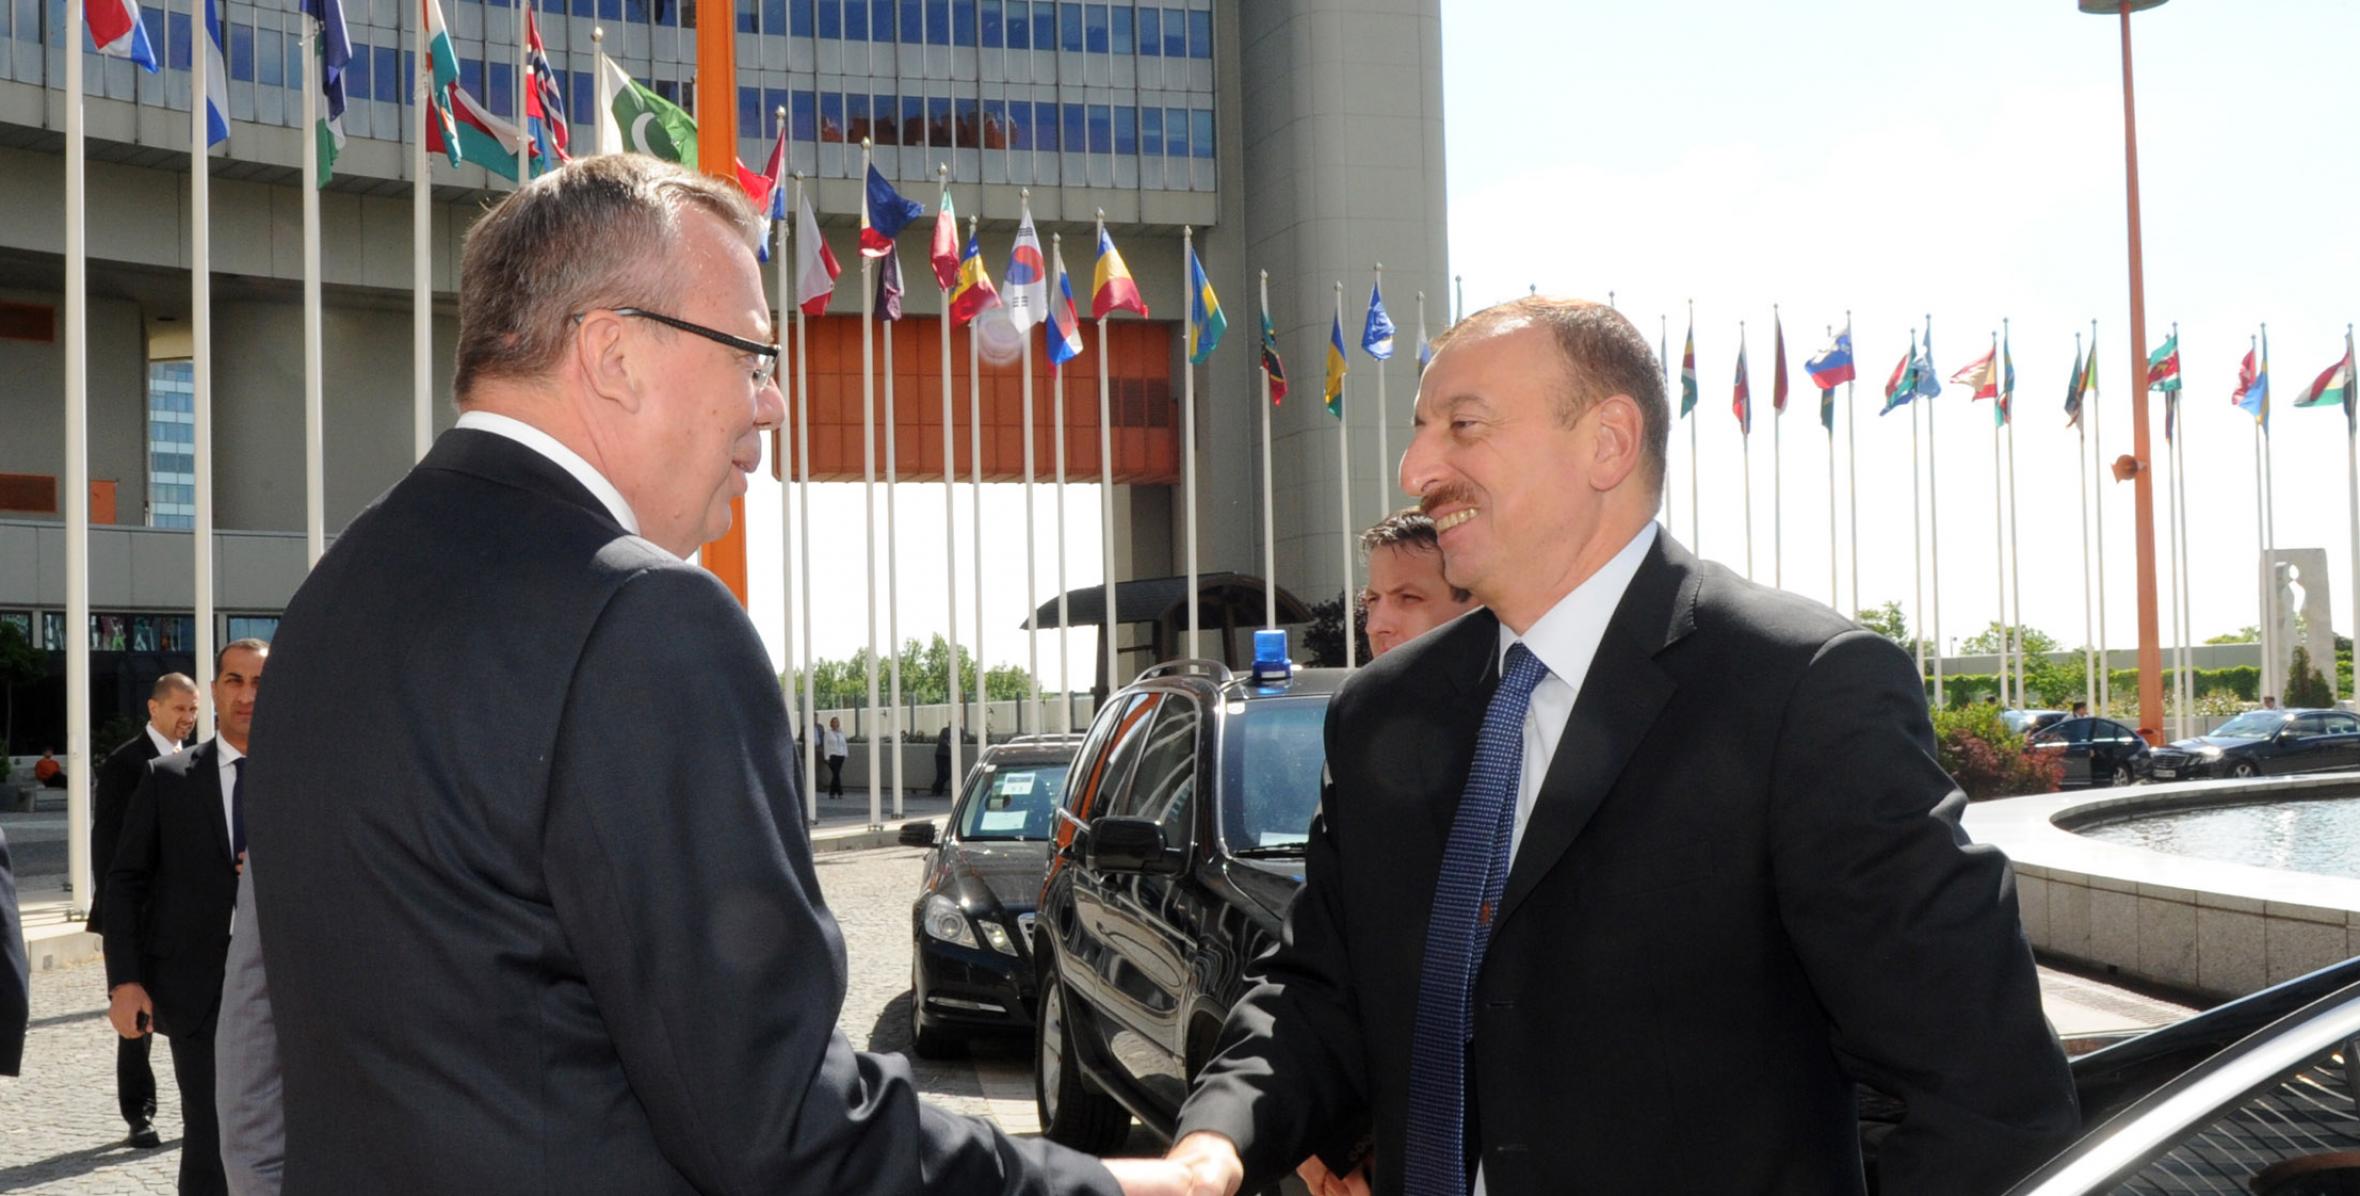 Ilham Aliyev met with Director General of the UN Vienna Office Yury Fedotov